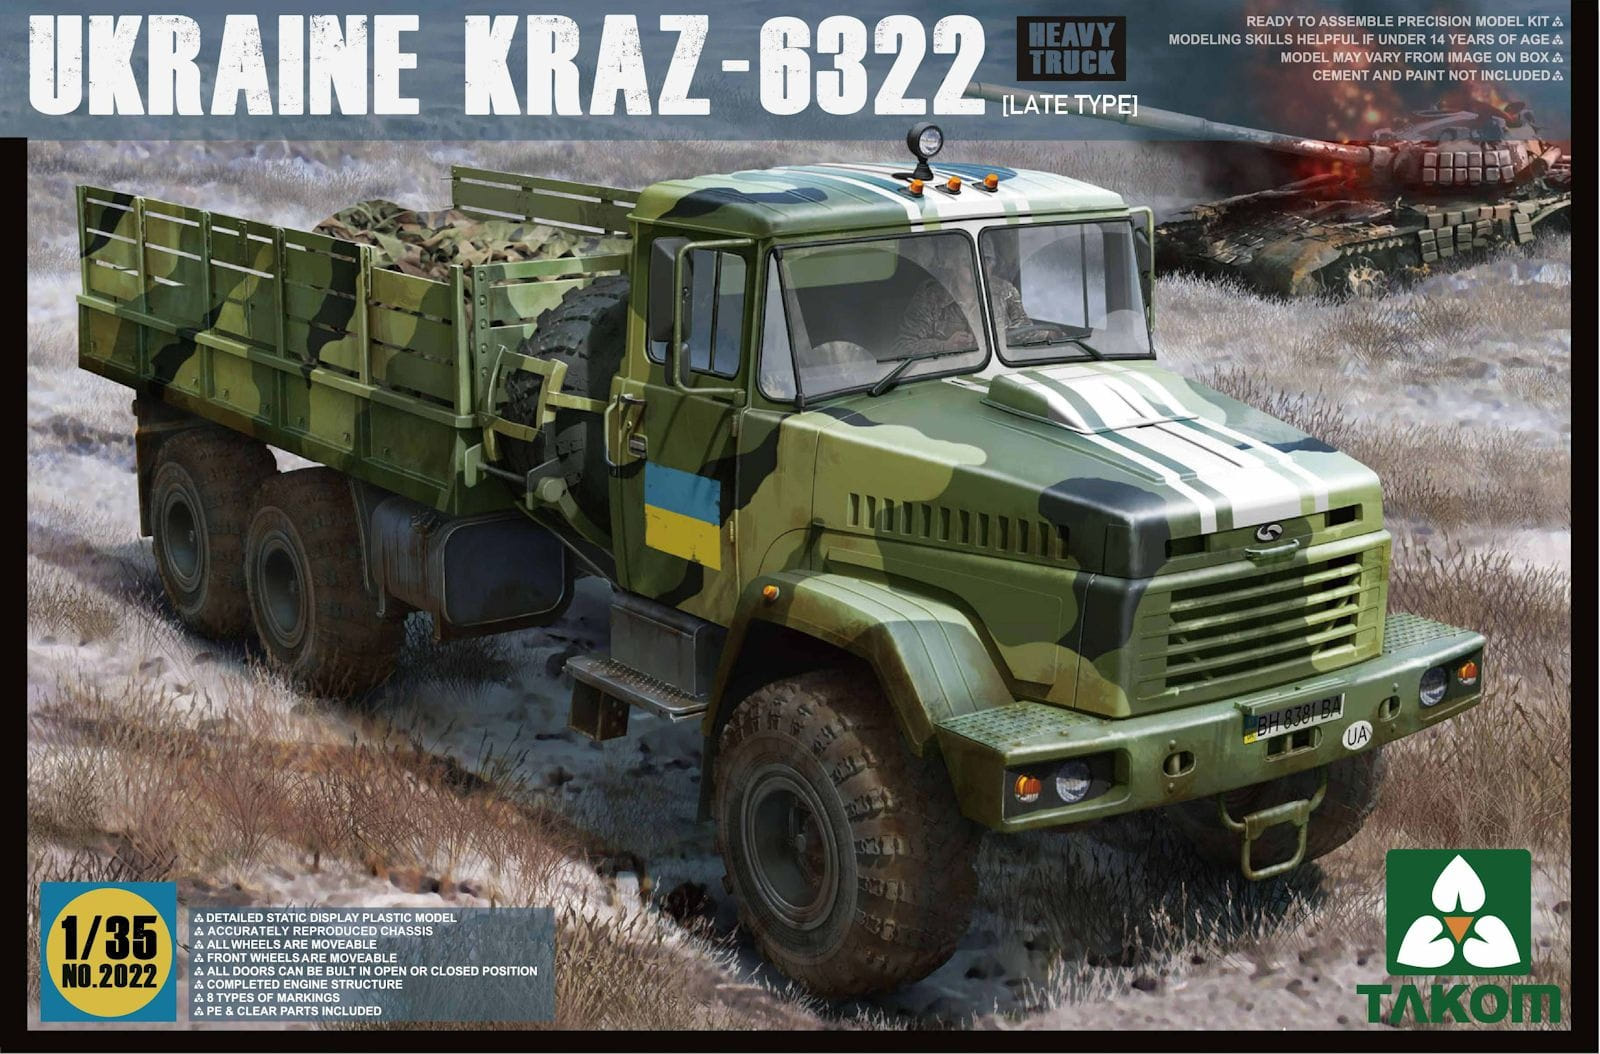 1/35 Ukraine KRAZ 6322 Heavy Truck Late Type